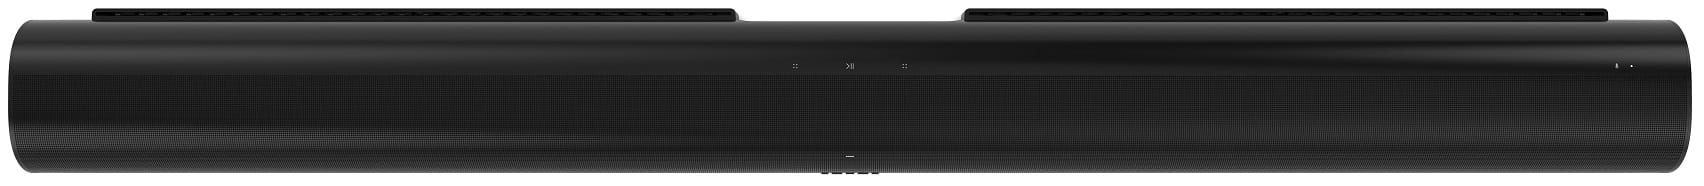 Sonos ARC zwart - bovenaanzicht - Soundbar